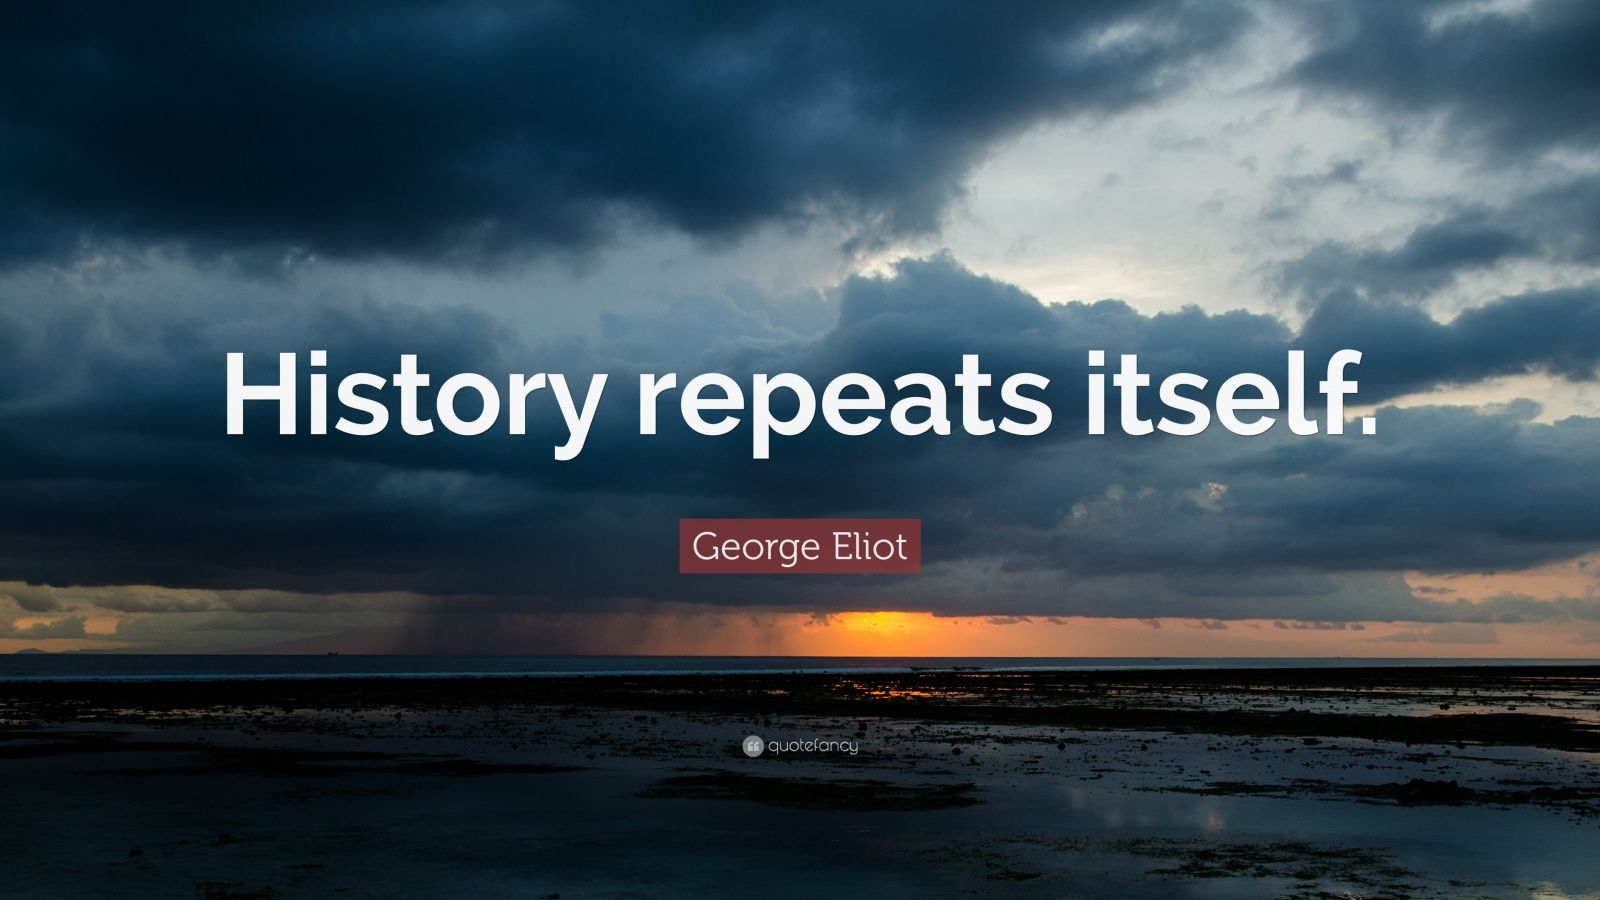 do you think history repeats itself essay